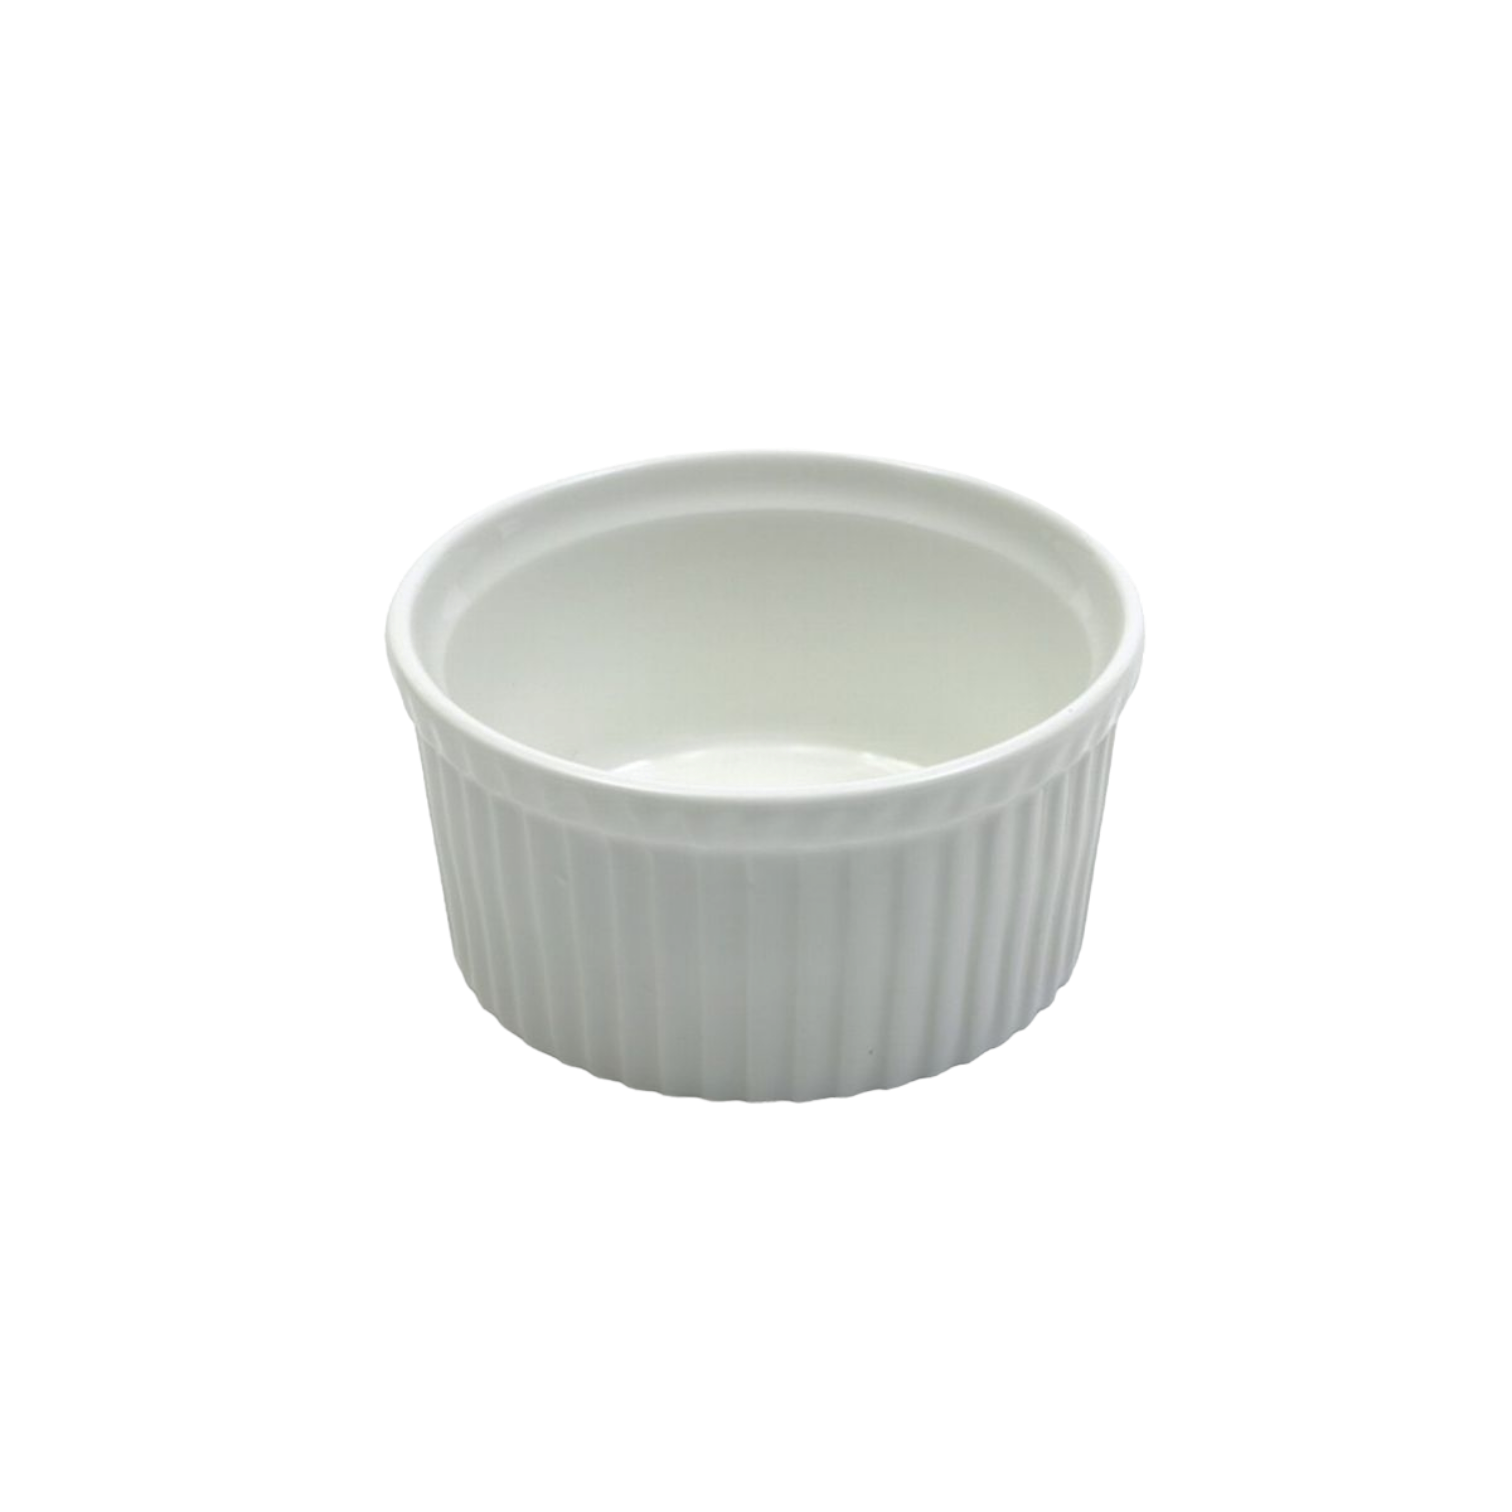 Ramekin Ceramic Ribbed 5inch 12.5x8cm White Baking Round Bowl